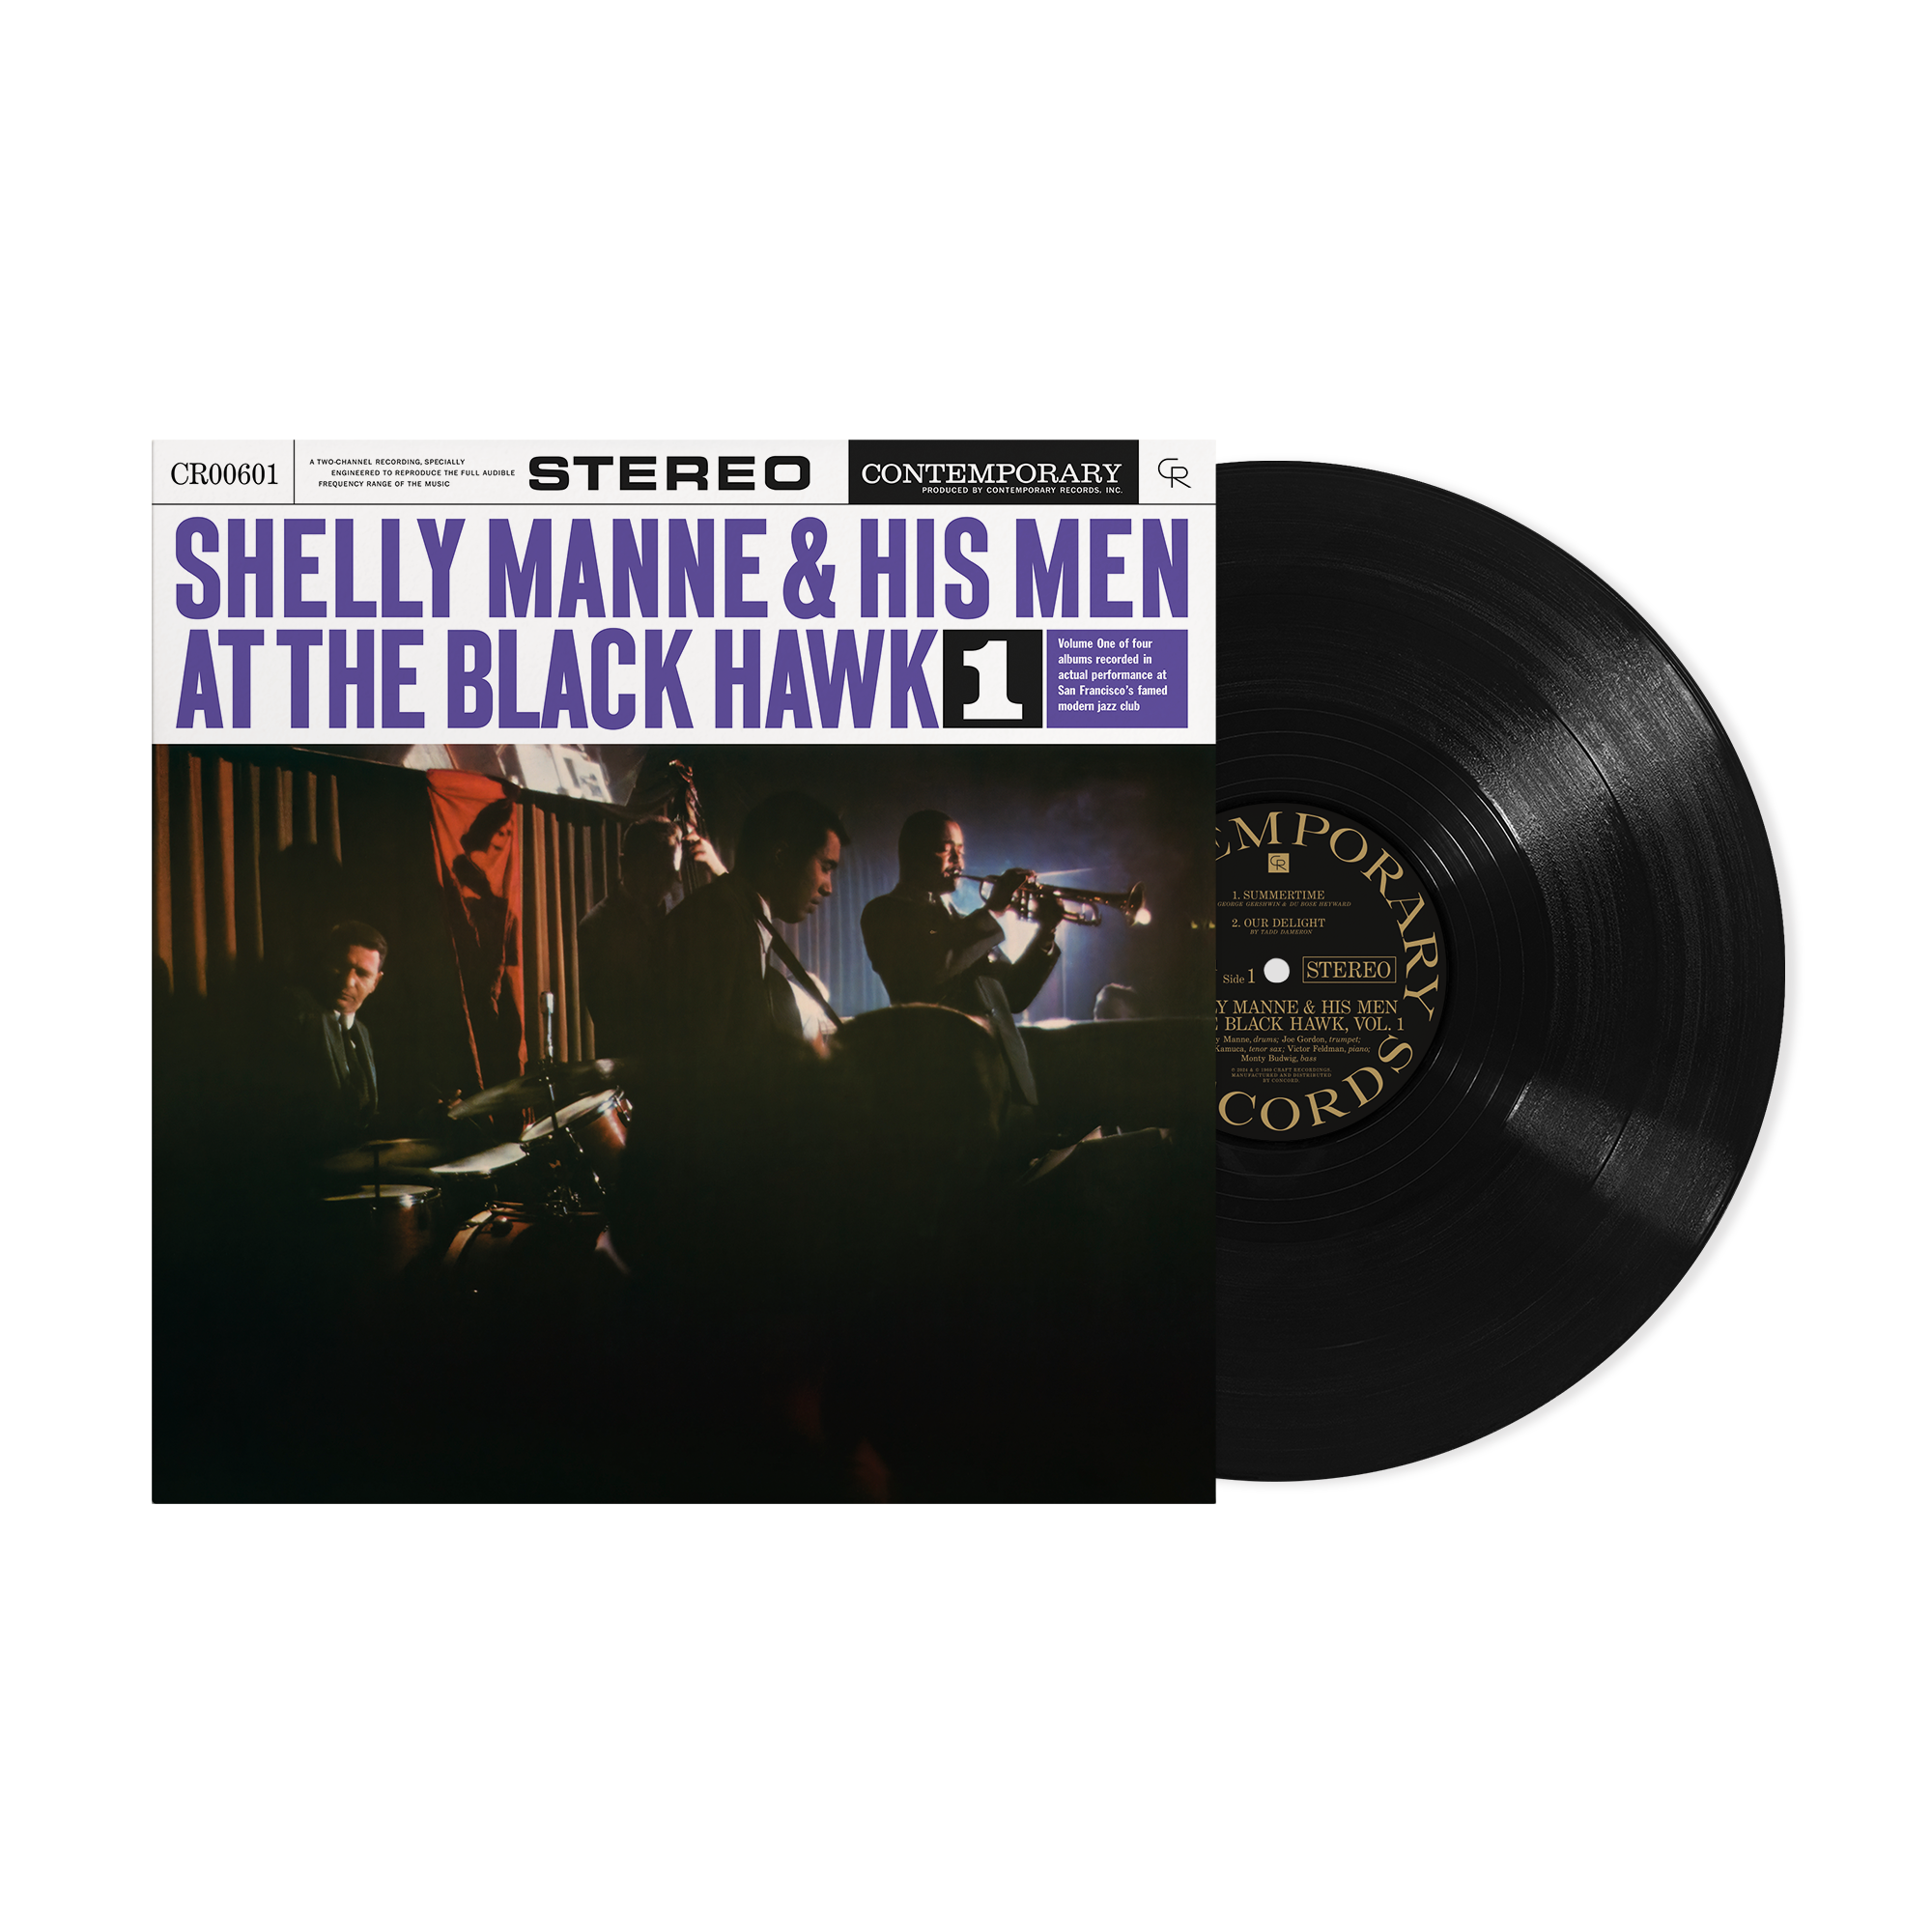 Shelly Manne & His Men - At The Black Hawk, Vol. 1 (Contemporary Records Acoustic Sounds Series 2024): Vinyl LP